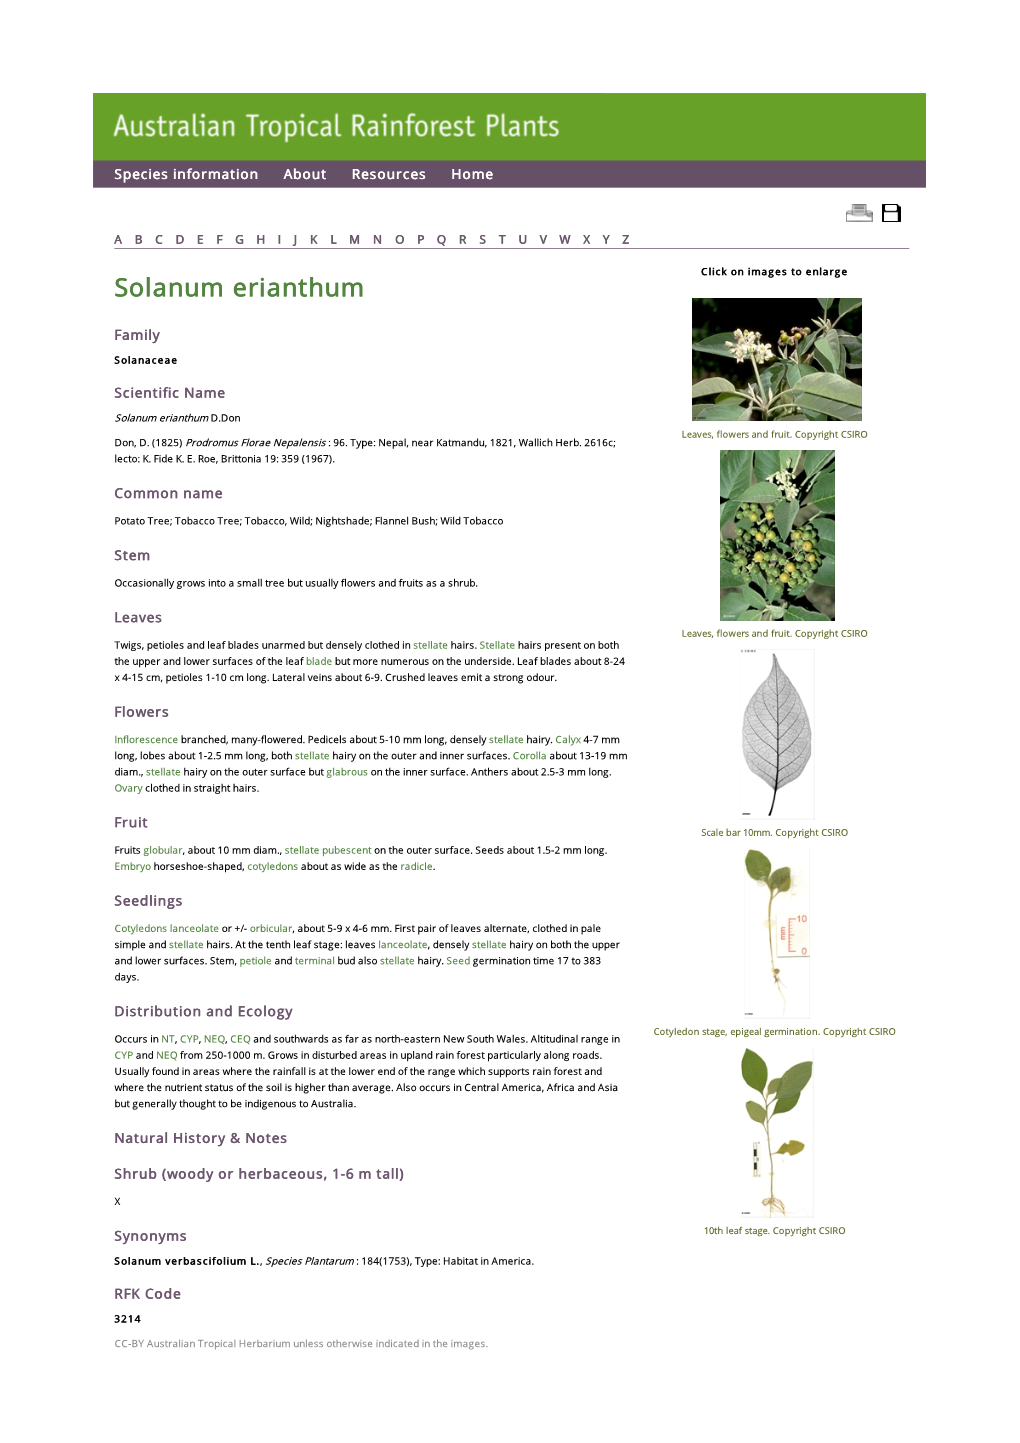 Solanum Erianthum Click on Images to Enlarge